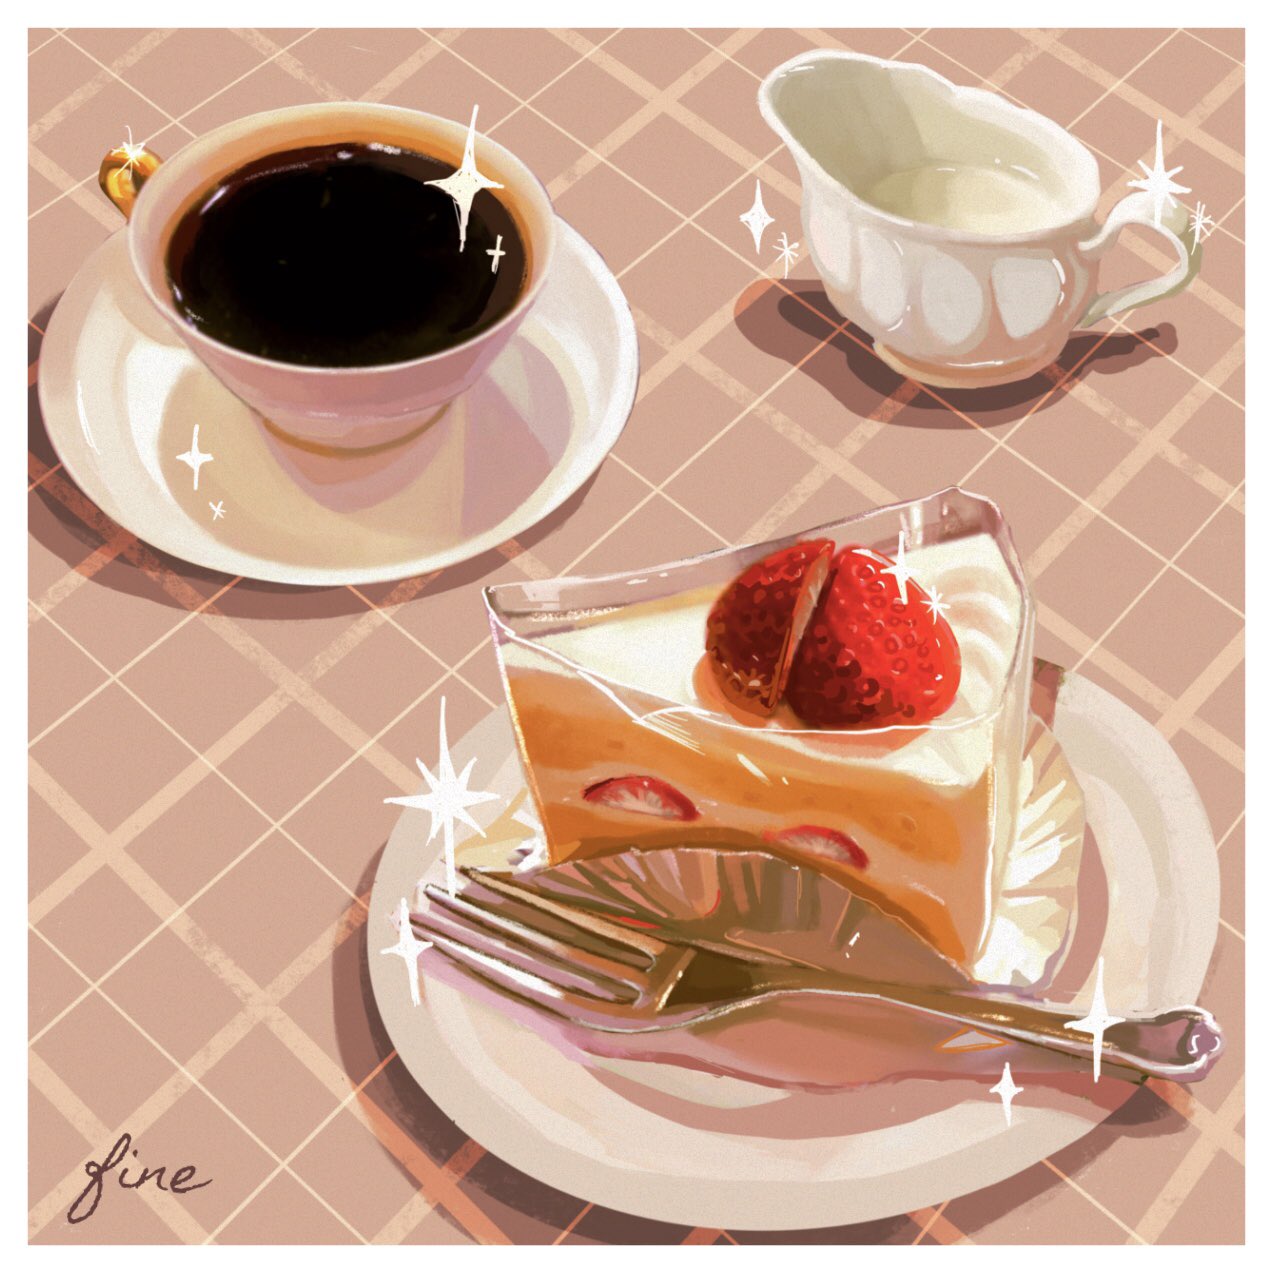 strawberry sponge cake (from series 